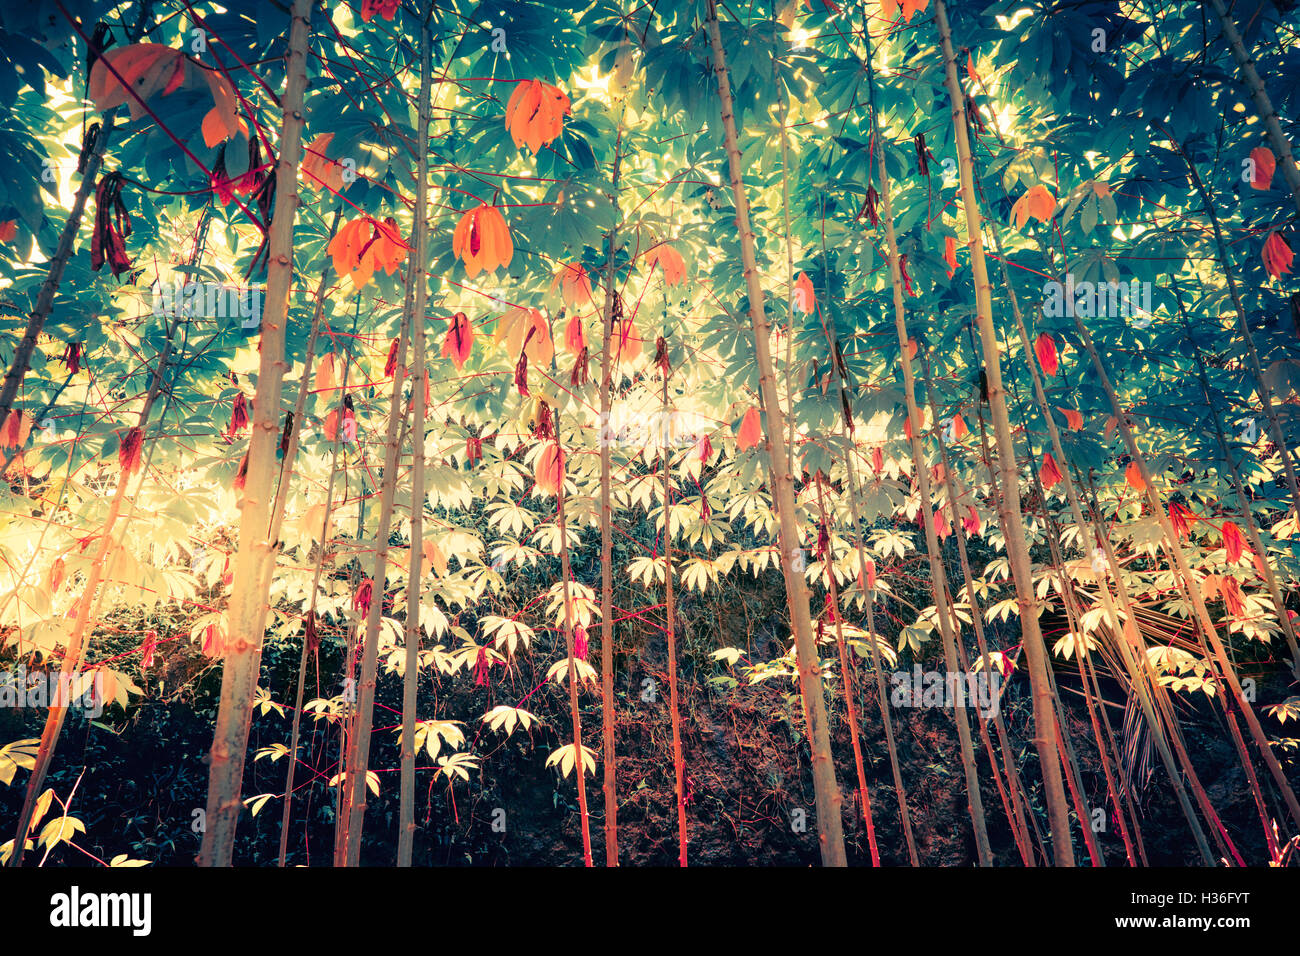 Surreal colors of fantasy tropical jungle plants with sun shining through dense vegetation Stock Photo